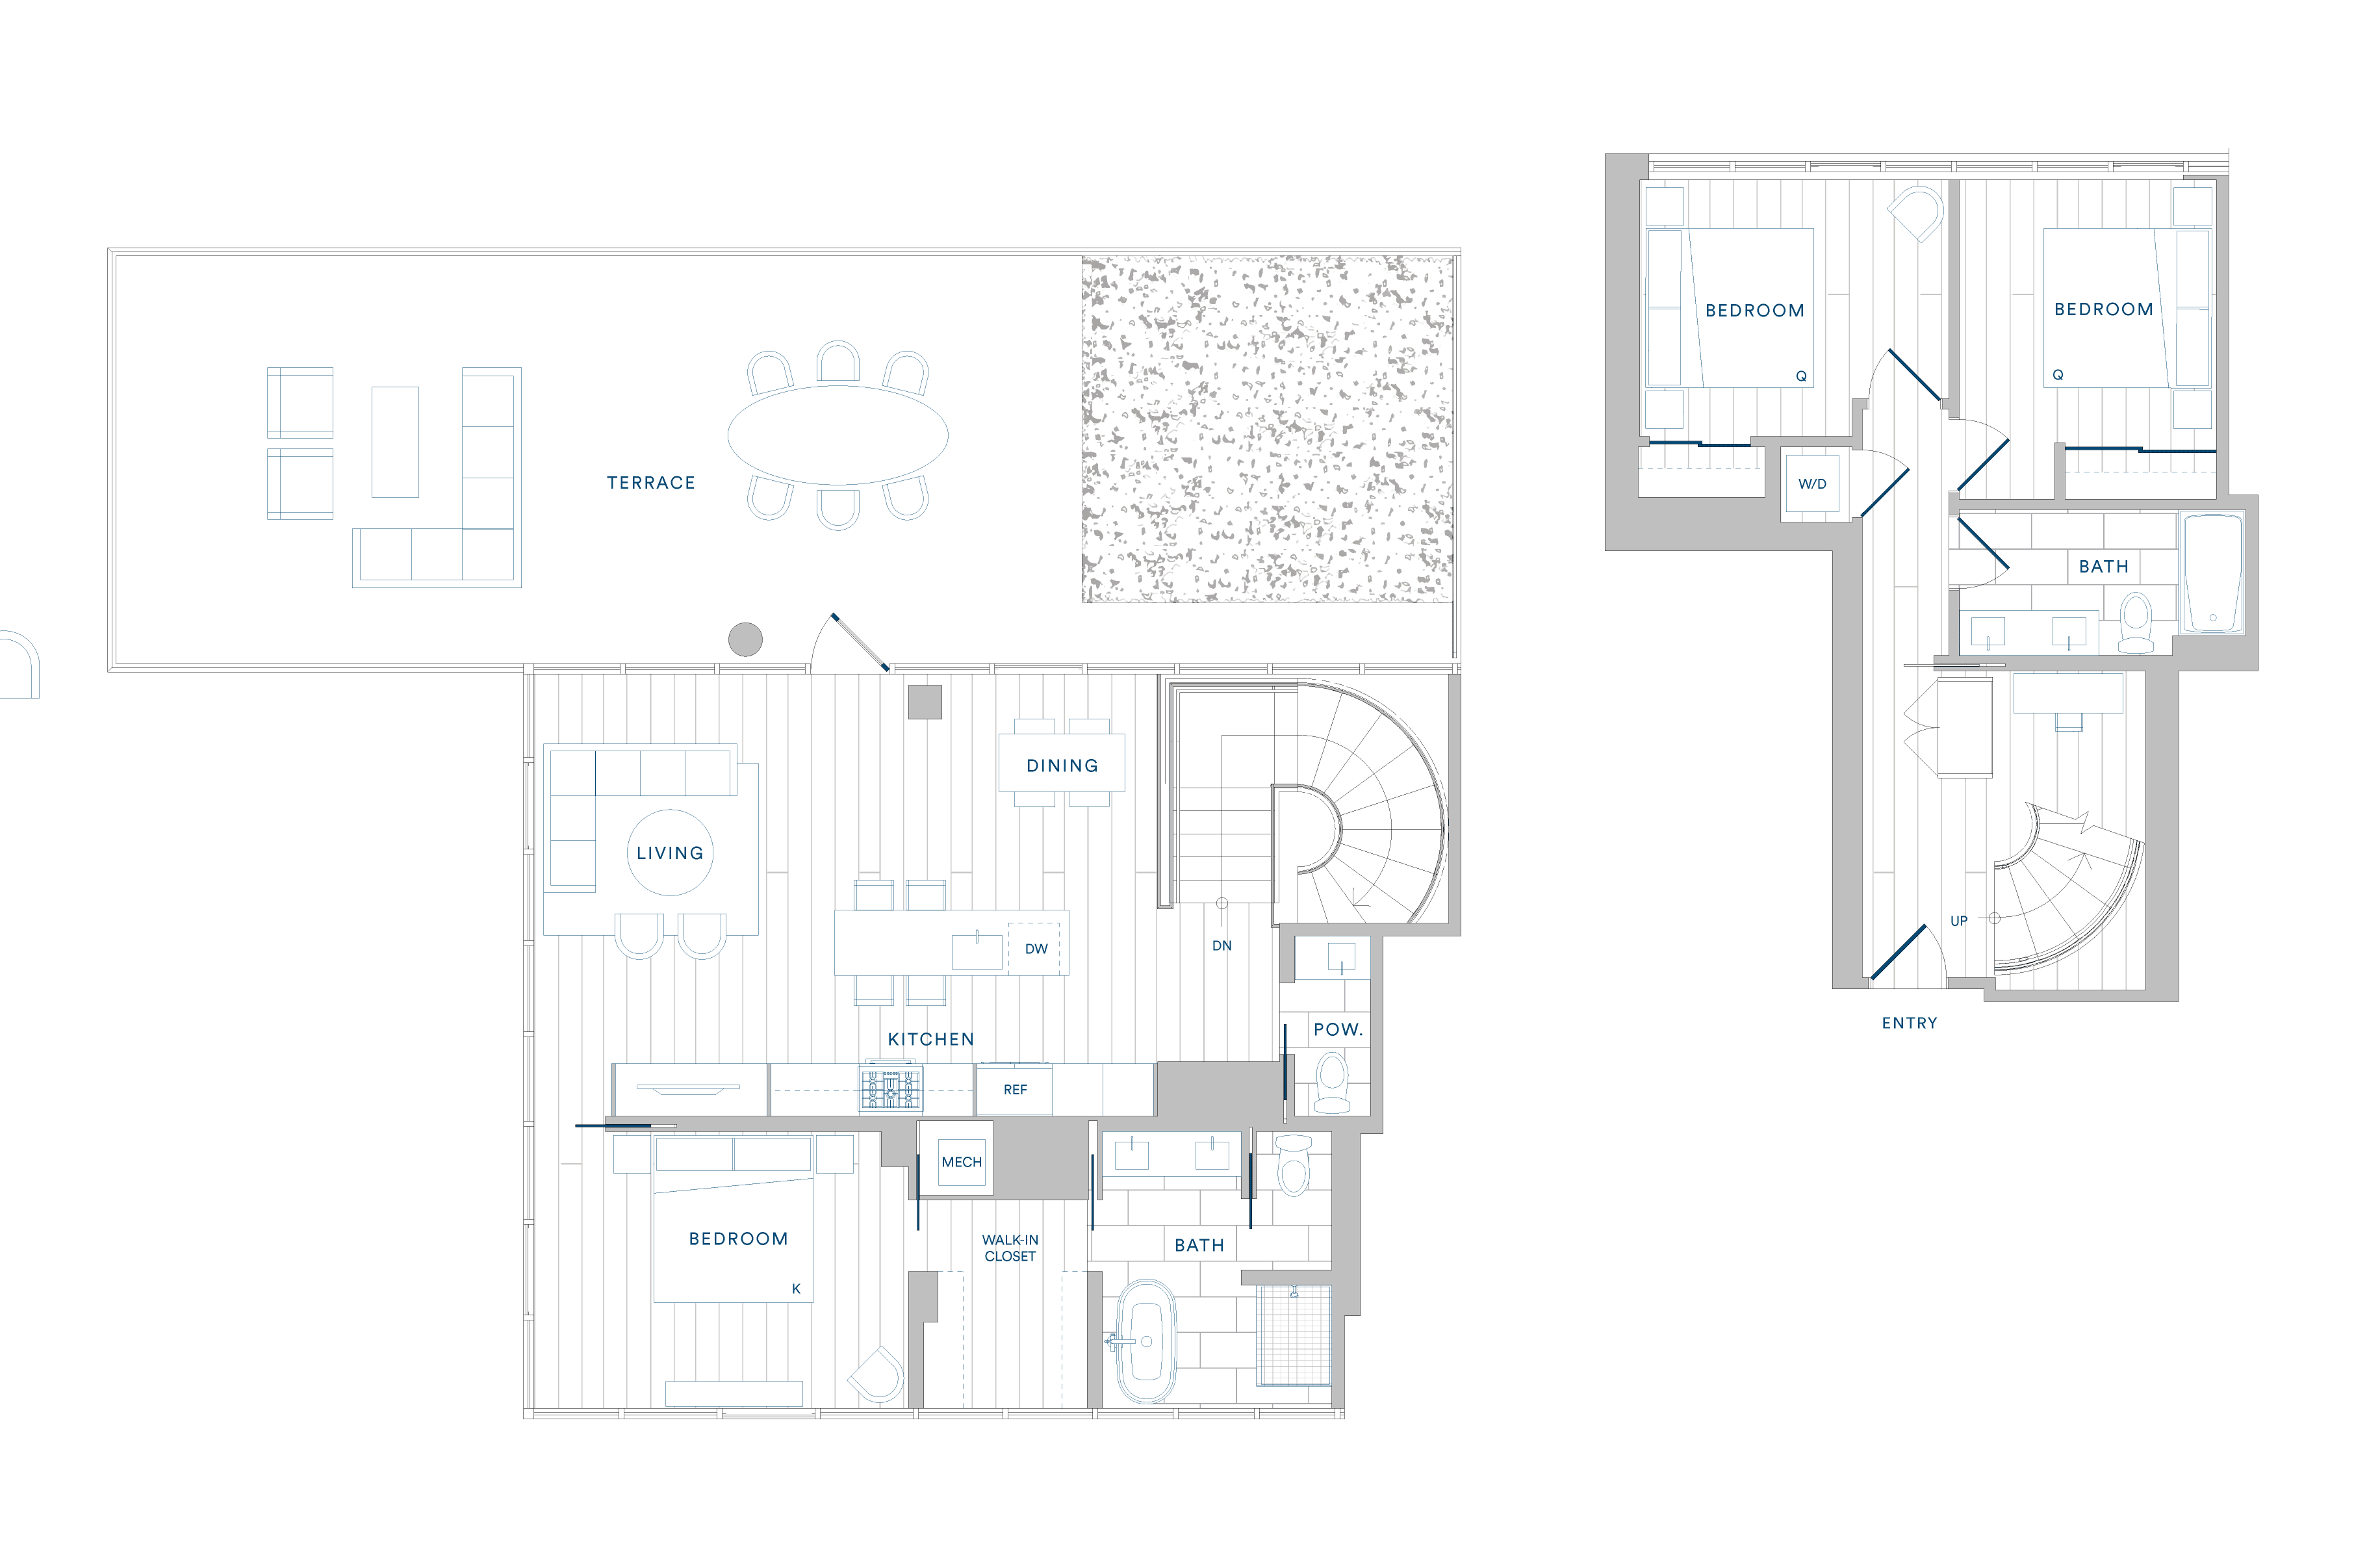 Floorplan for Apartment #1304, 3 bedroom unit at Margarite